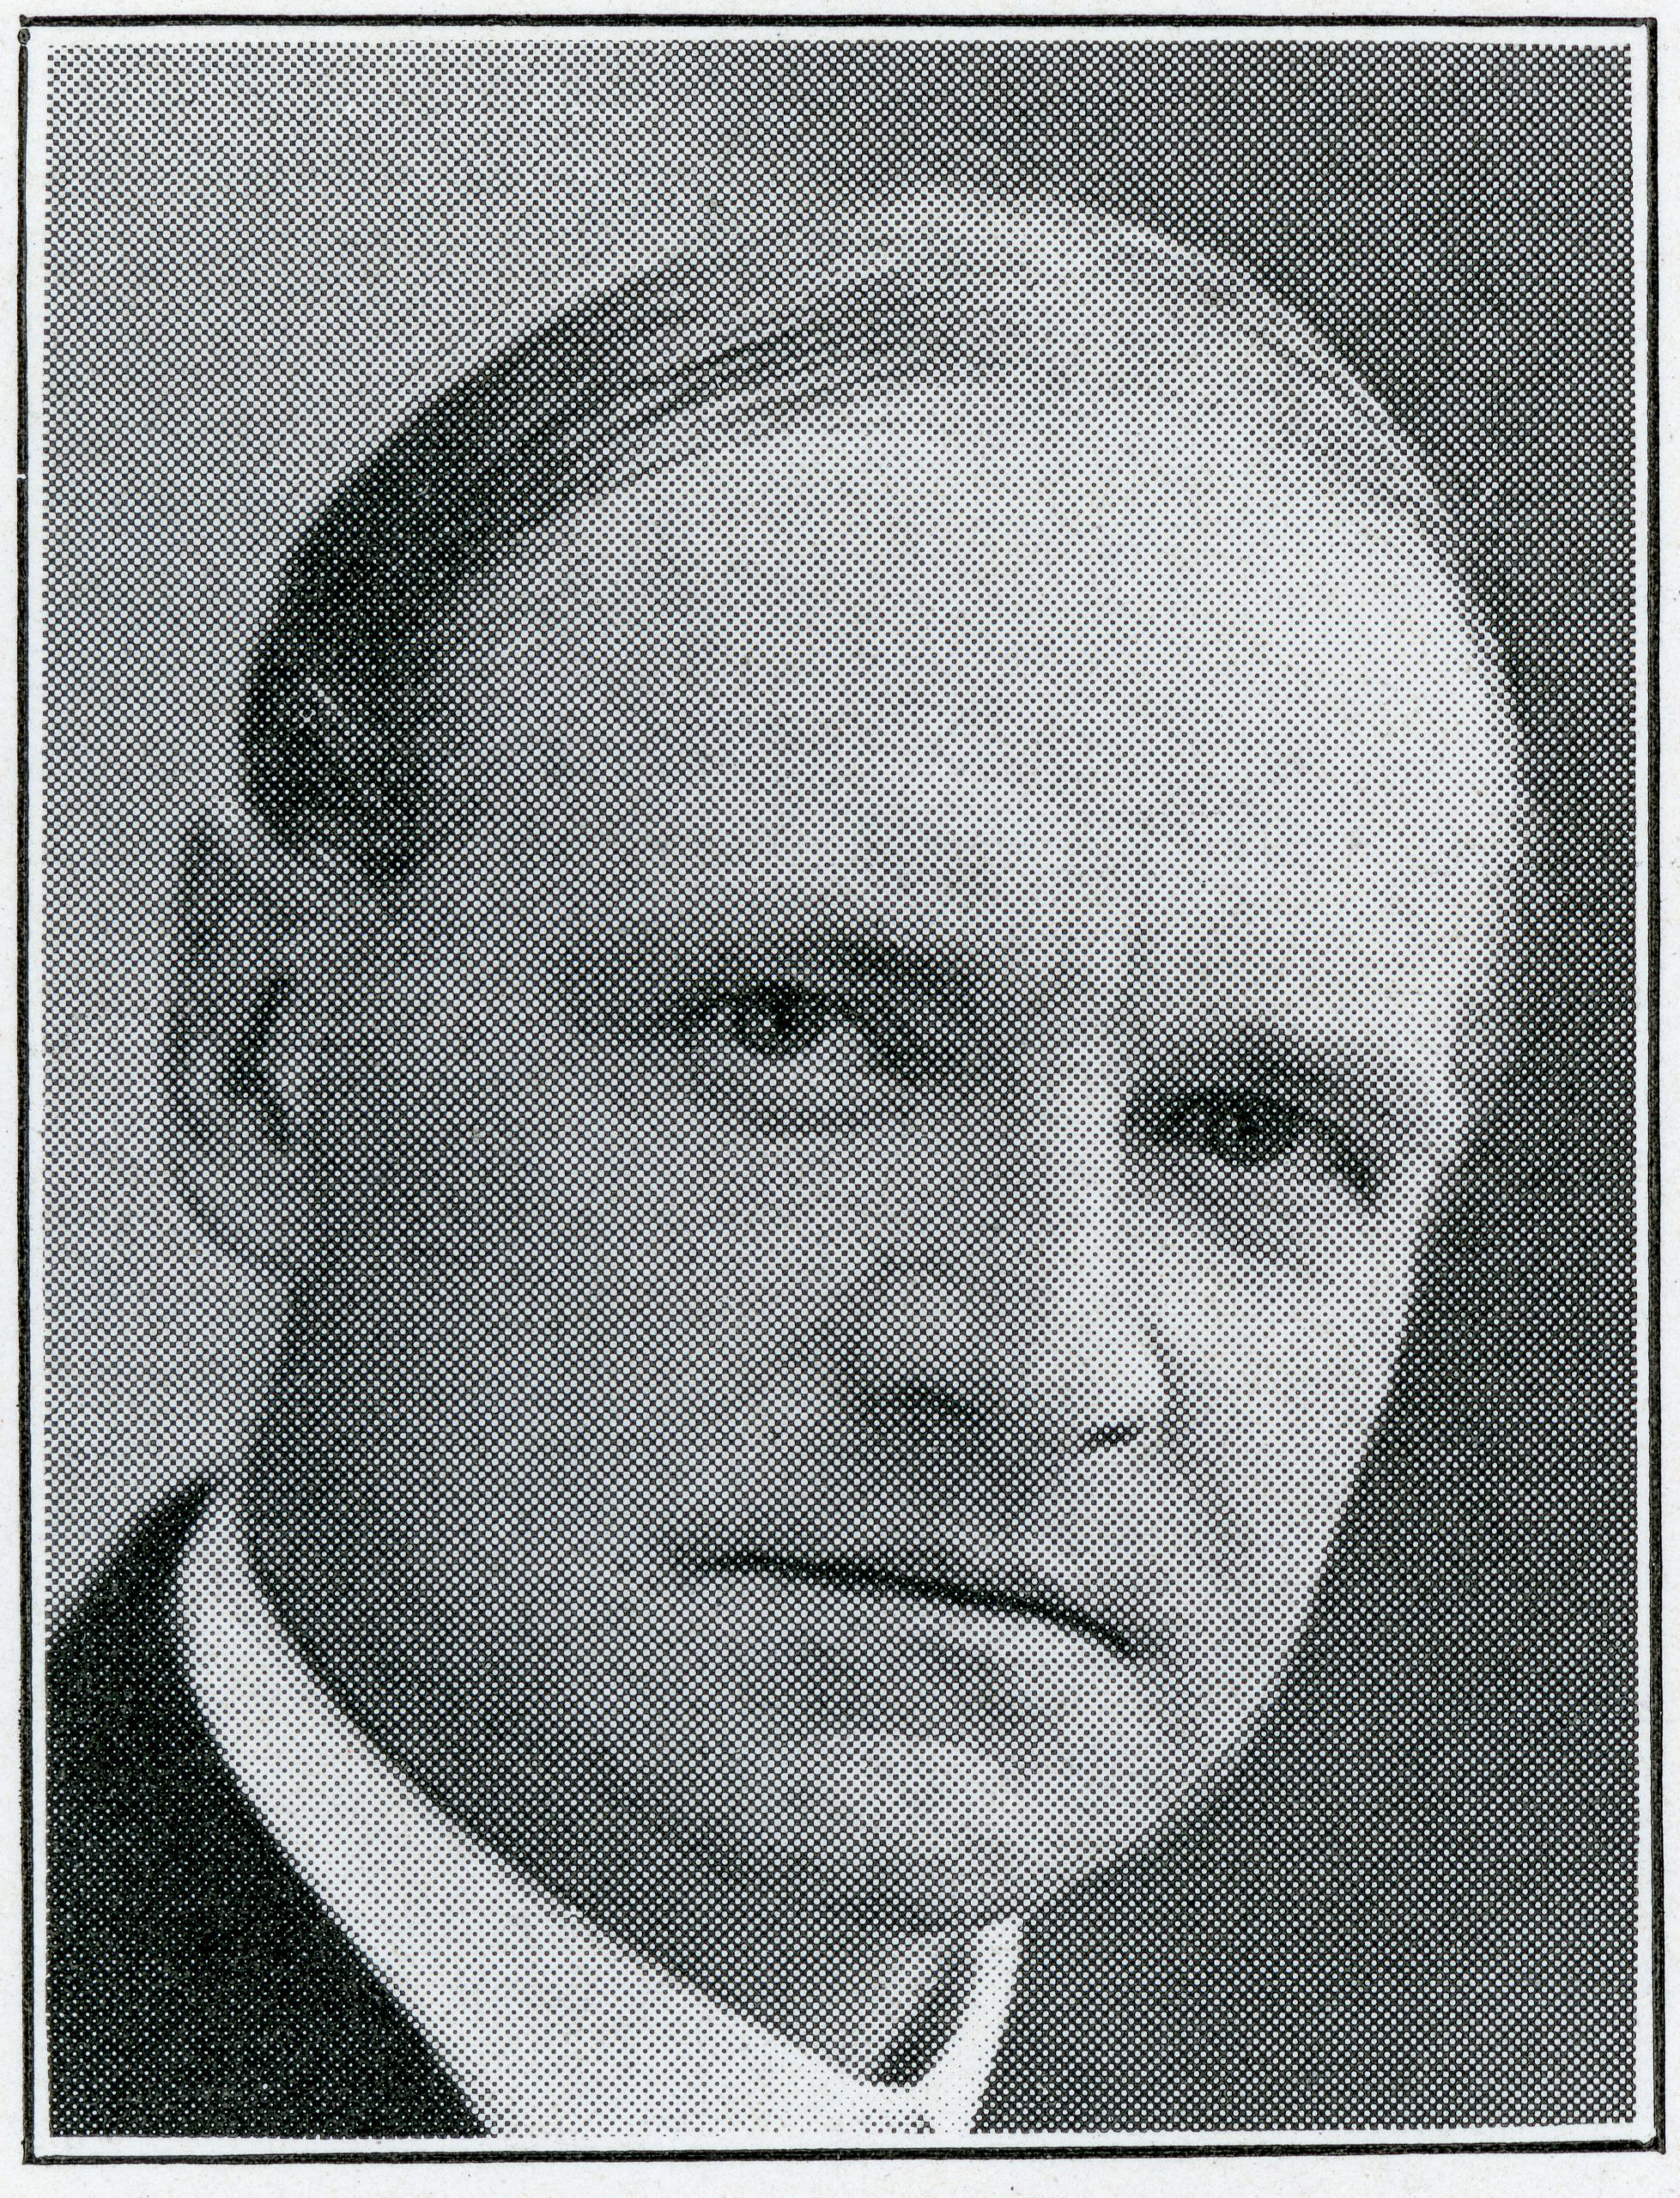 Ambrose White Vernon, founder of Carleton's Department of Biography